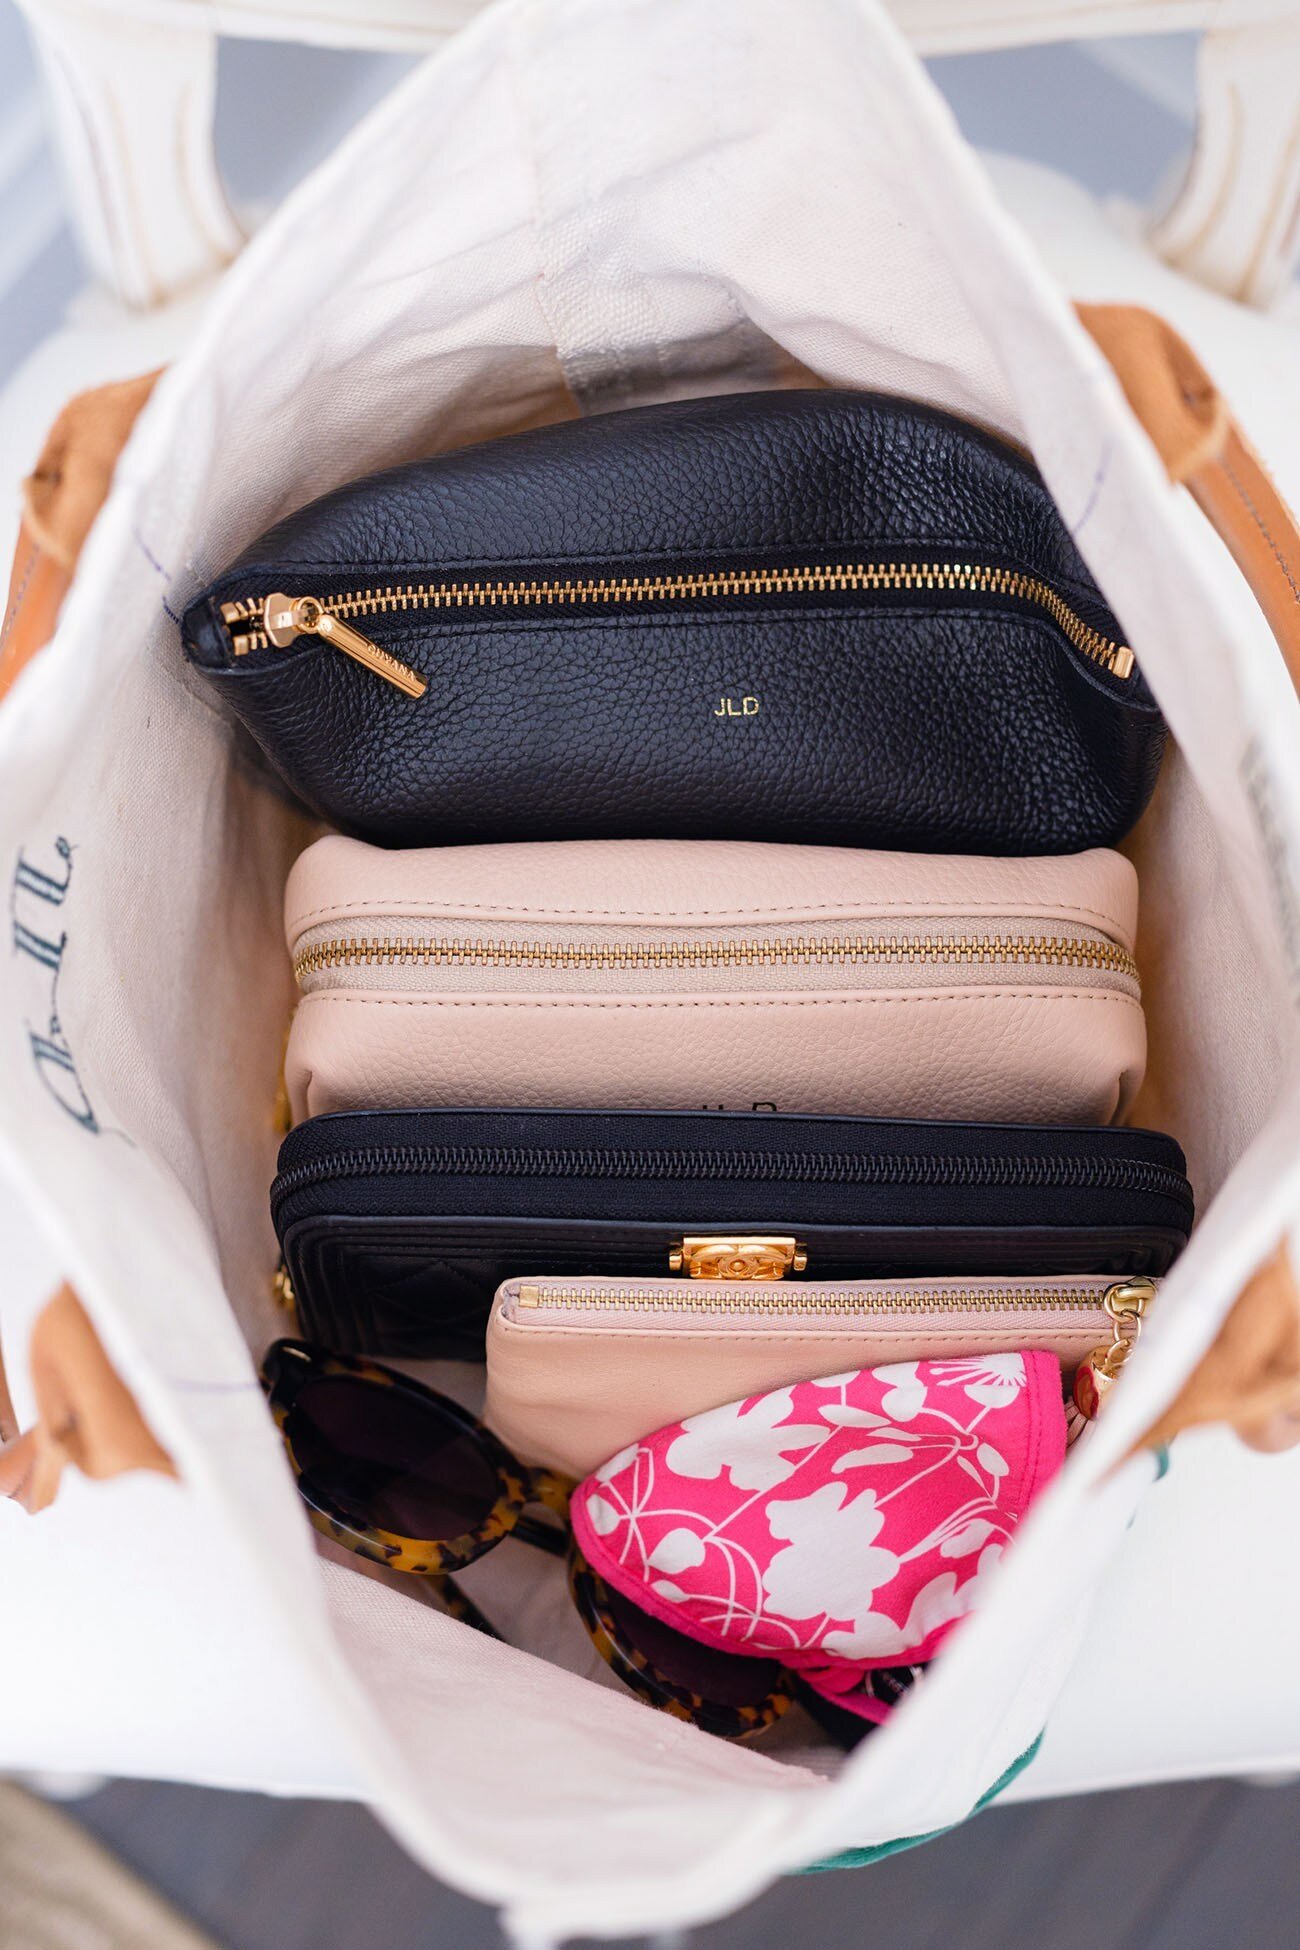 How to Organize Your Handbag or Purse